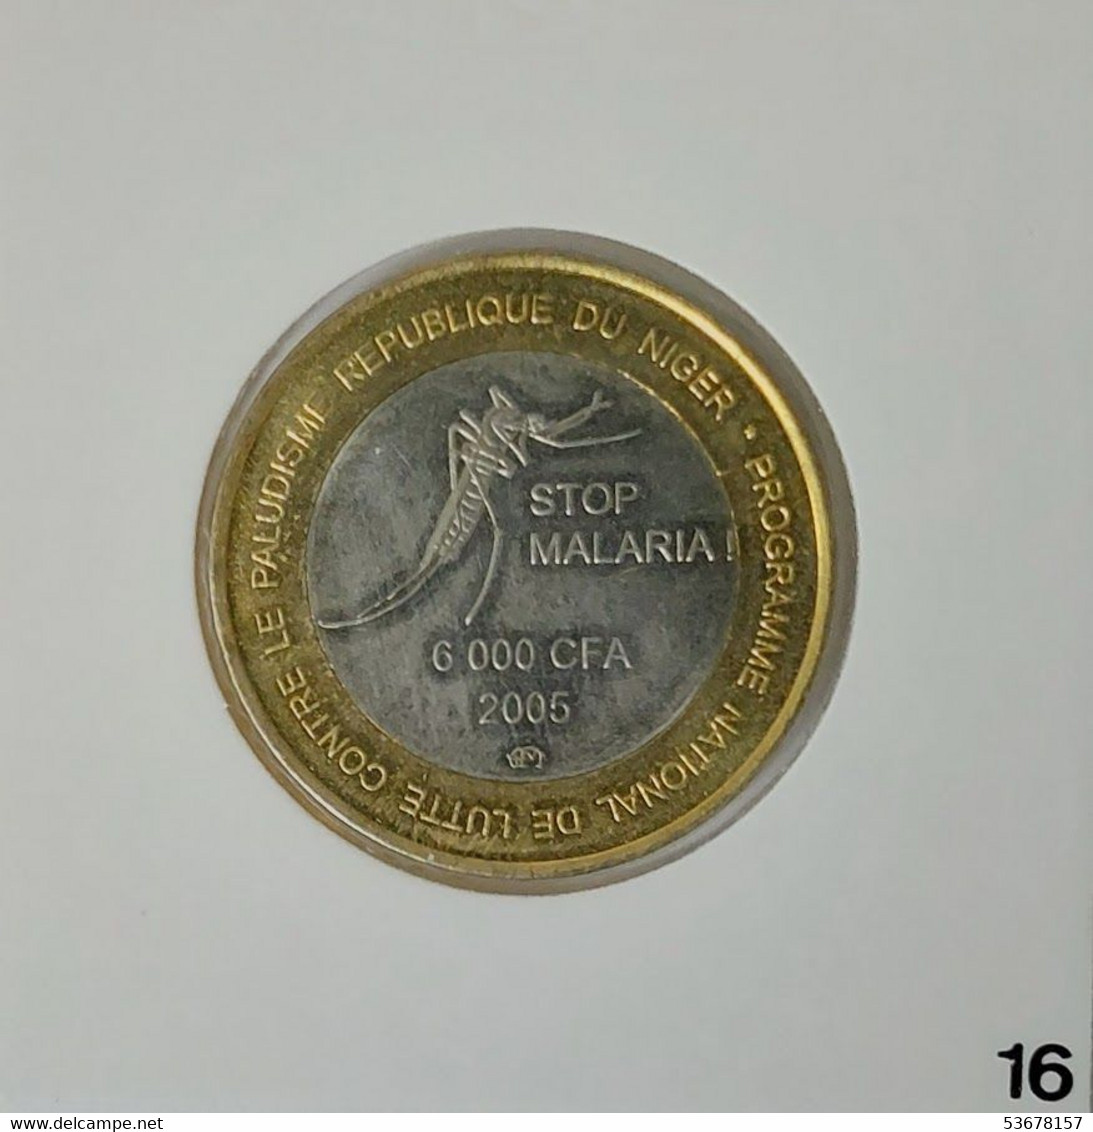 Niger - 6000 CFA Francs (2 Africa) 2005, Stop Malaria!, X# 16 (Fantasy Coin) (#1391) - Niger